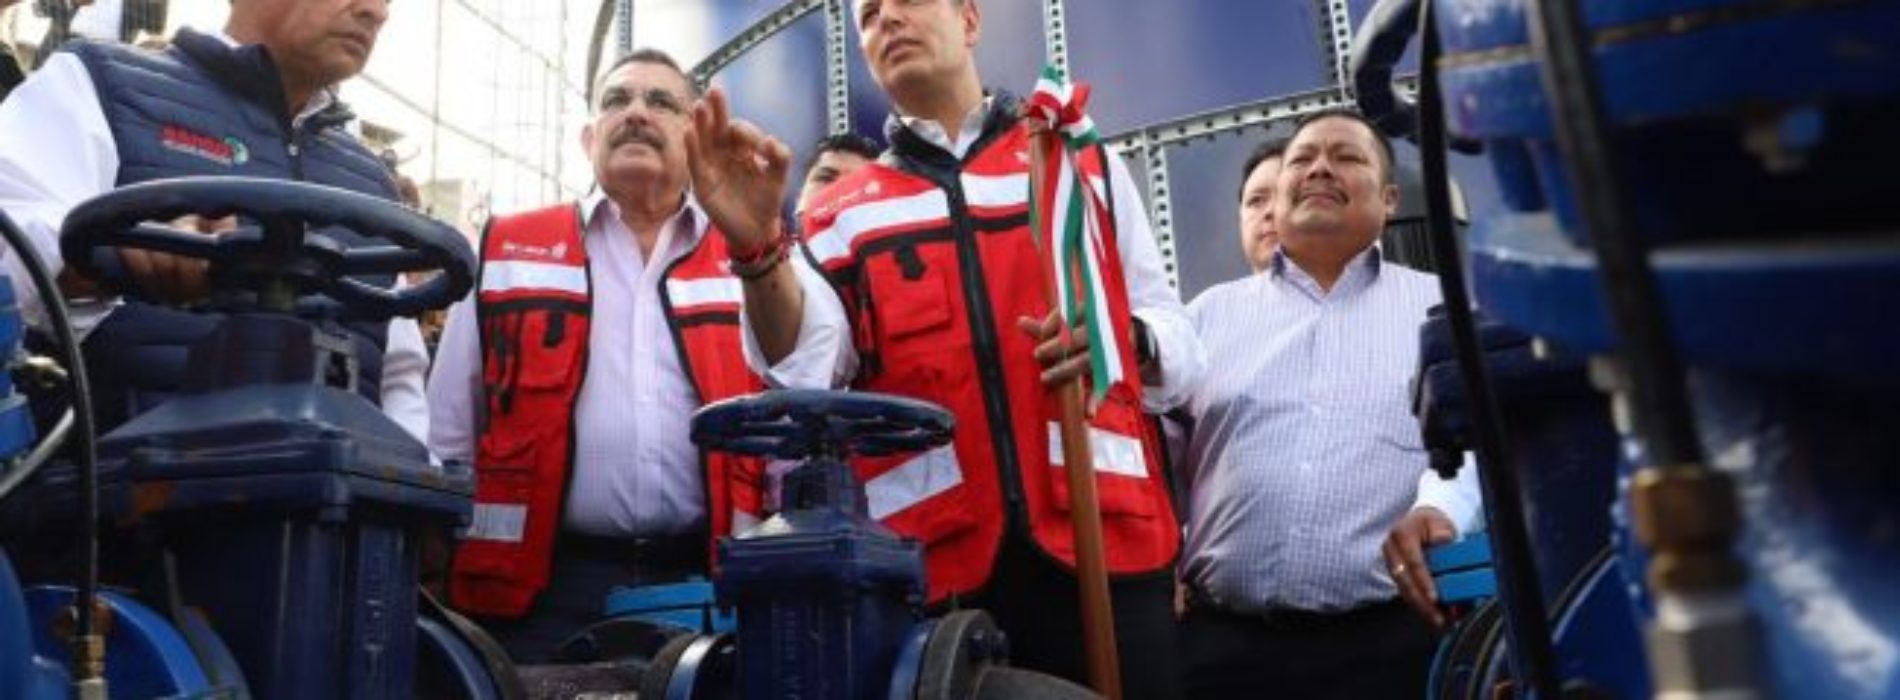 Garantiza Alejandro Murat suministro de agua en el municipio
capitalino